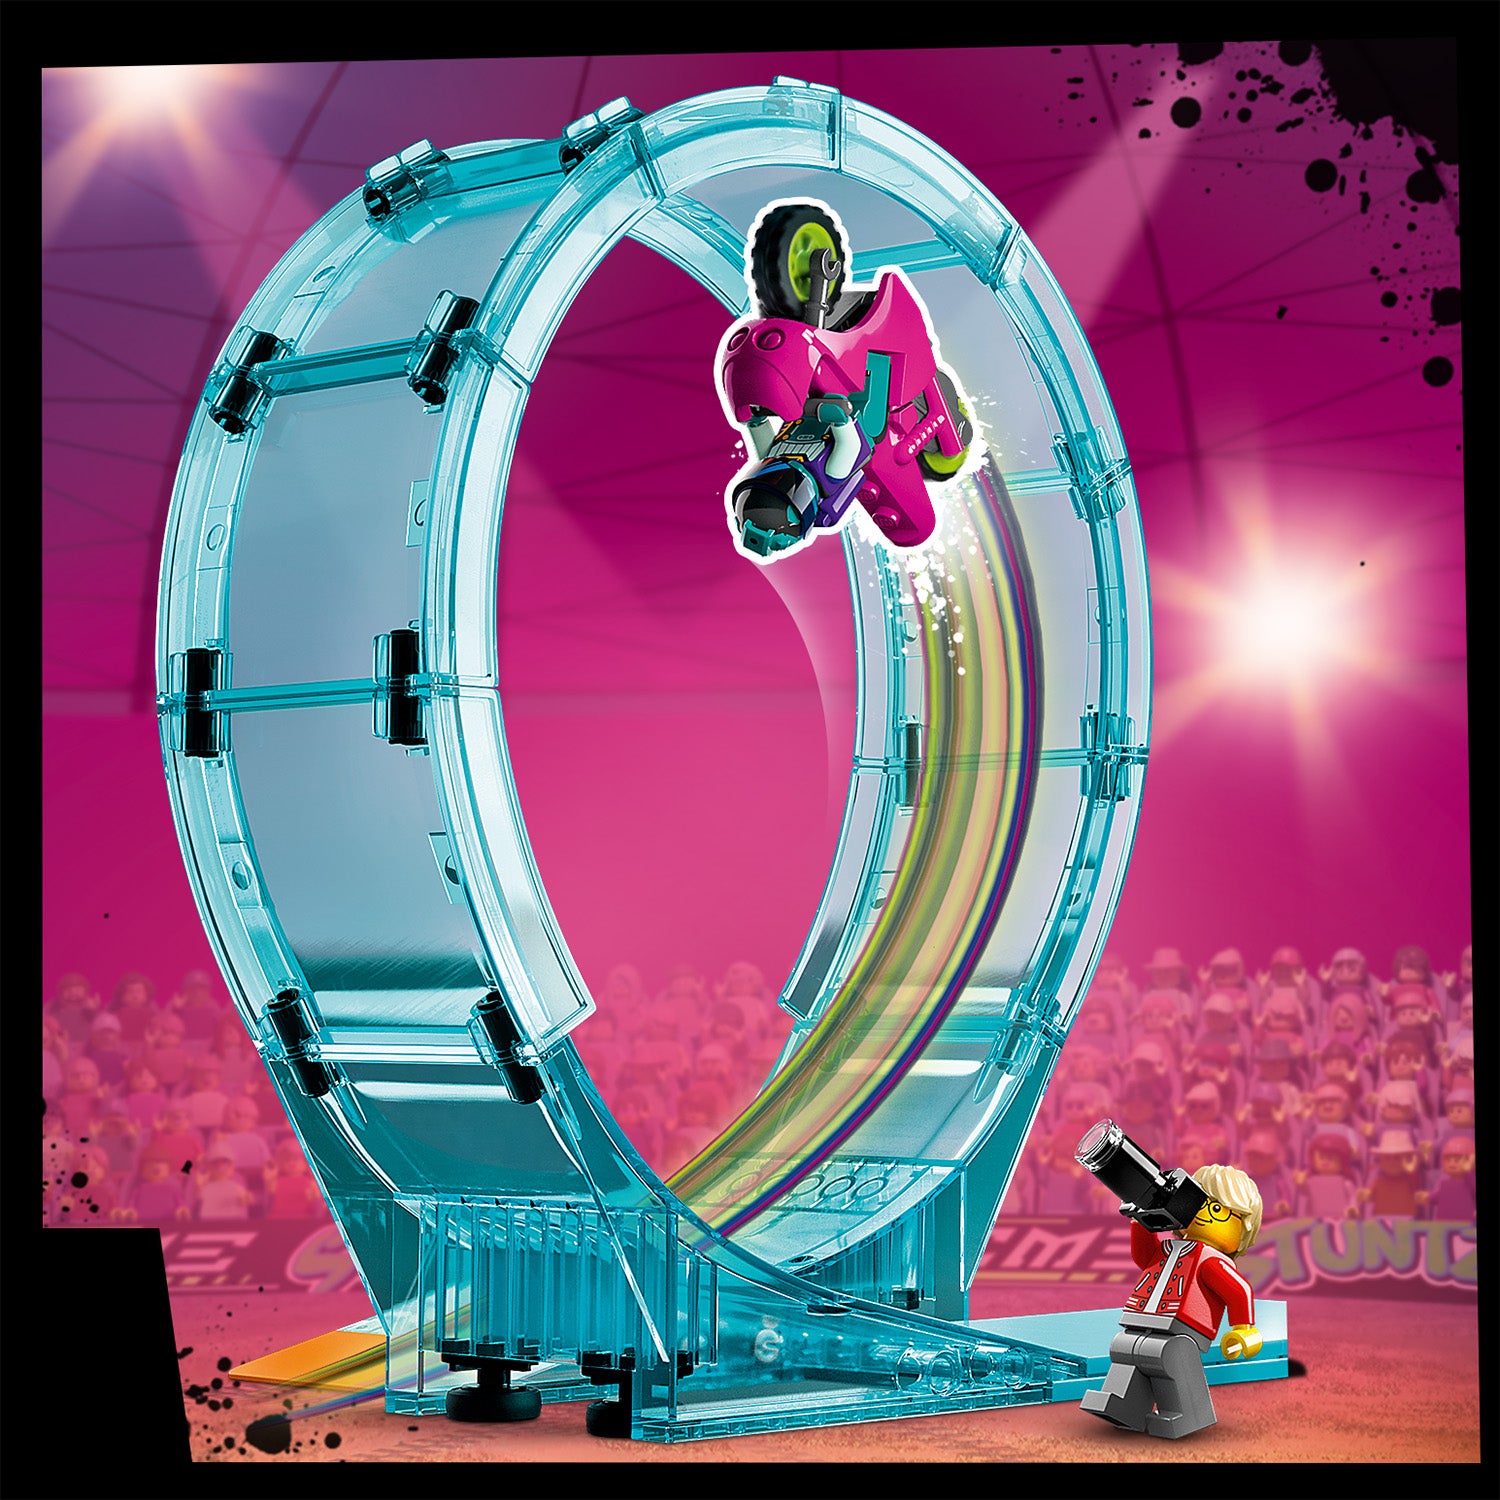 Lego 60361 Ultimate Stunt Riders Challenge